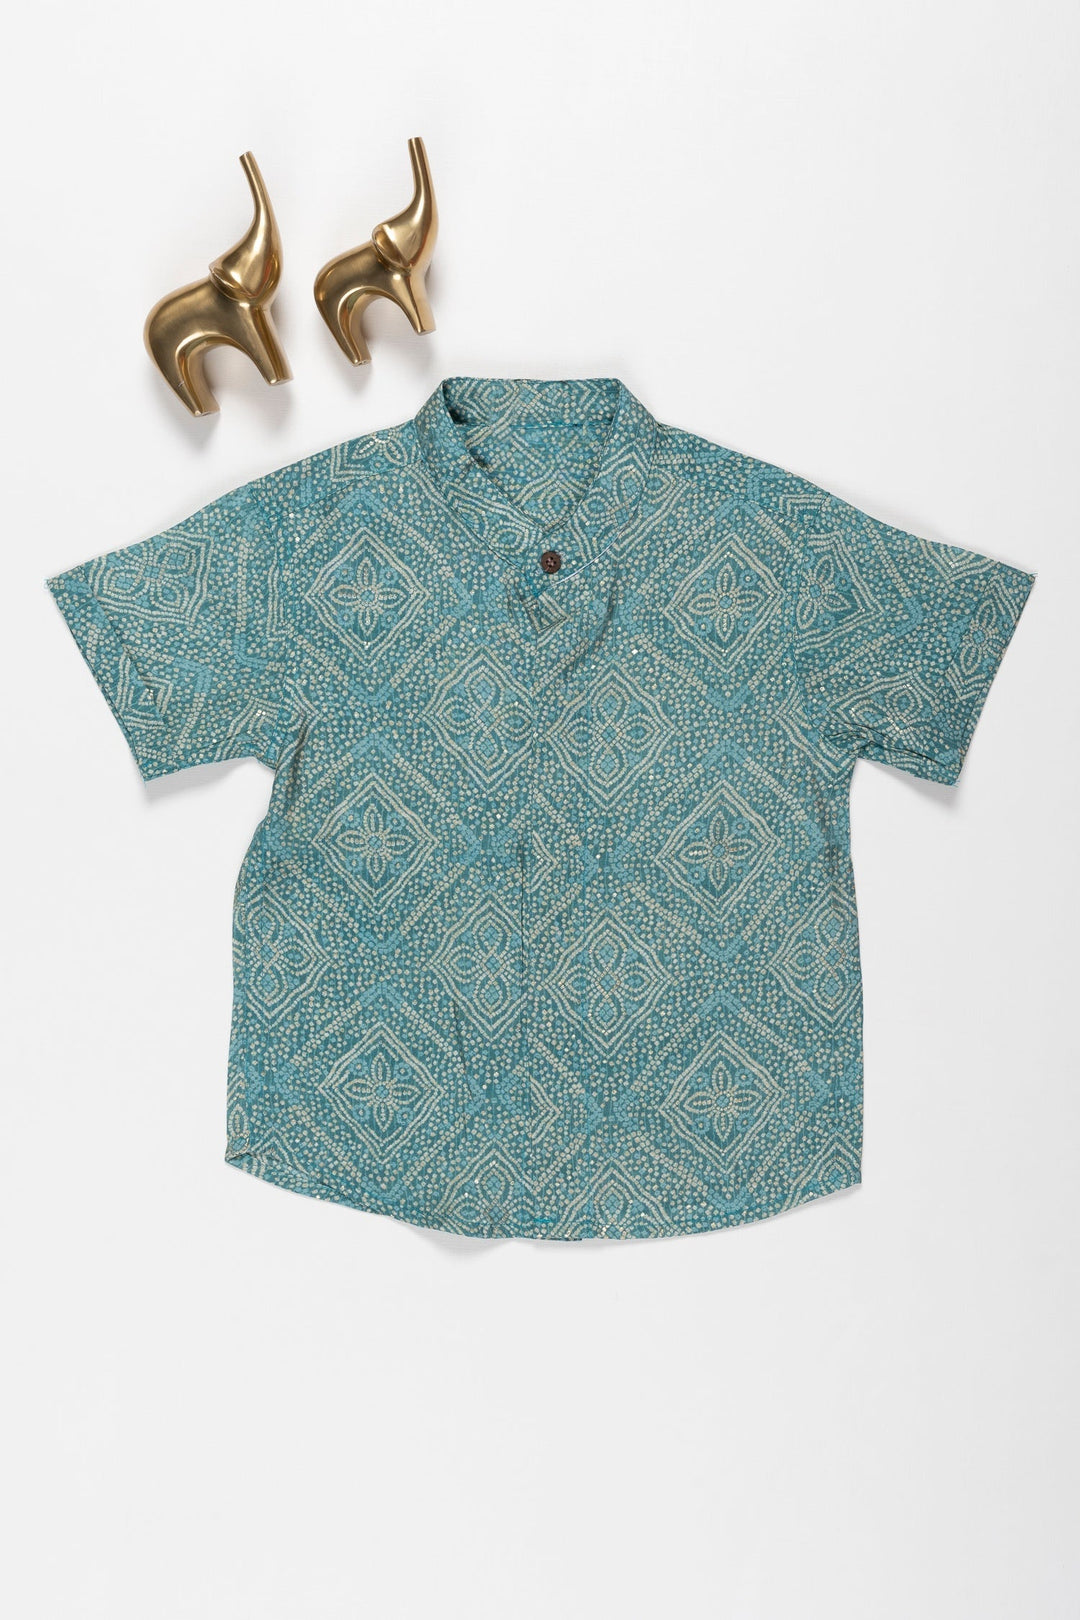 The Nesavu Boys Cotton Shirt Aqua Geometric Bliss Cotton Shirt for Boys - Cool Comfort Nesavu 16 (1Y) / Blue / Viscose Silk BS135B-16 Boys Aqua Geometric Print Shirt | Fresh Style & Ultimate Comfort | The Nesavu